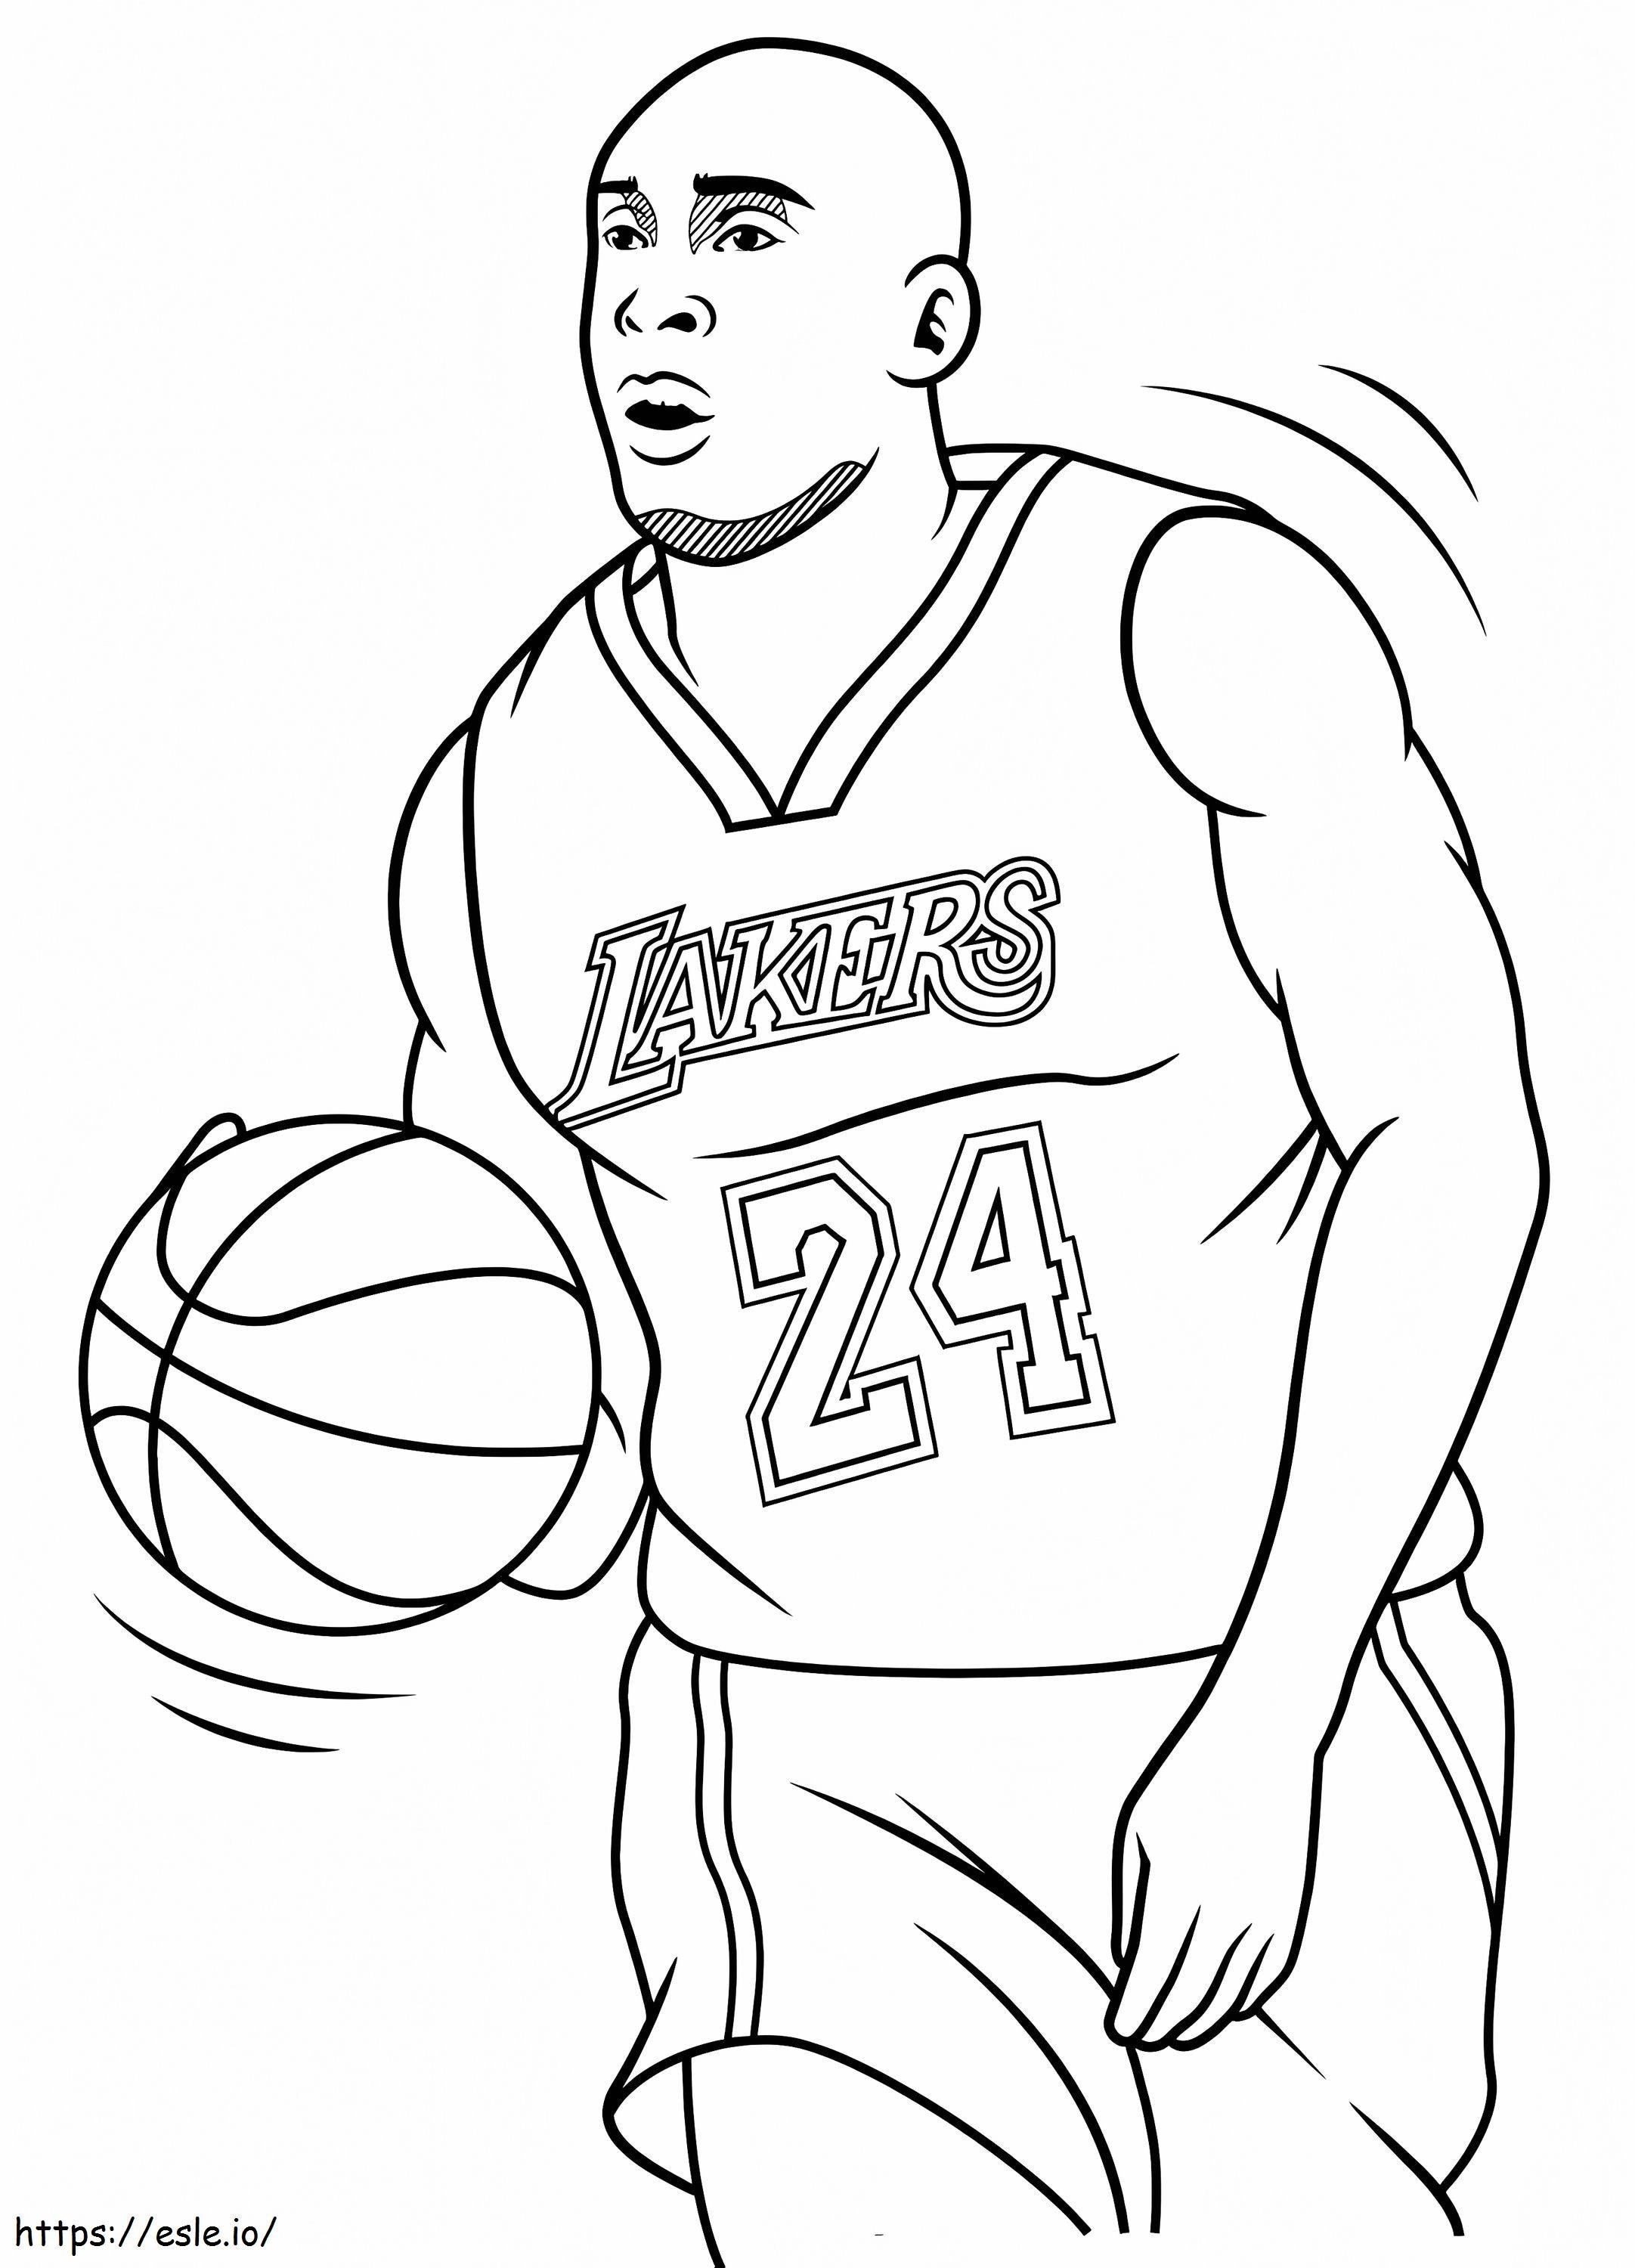 Free Printable Kobe Bryant coloring page